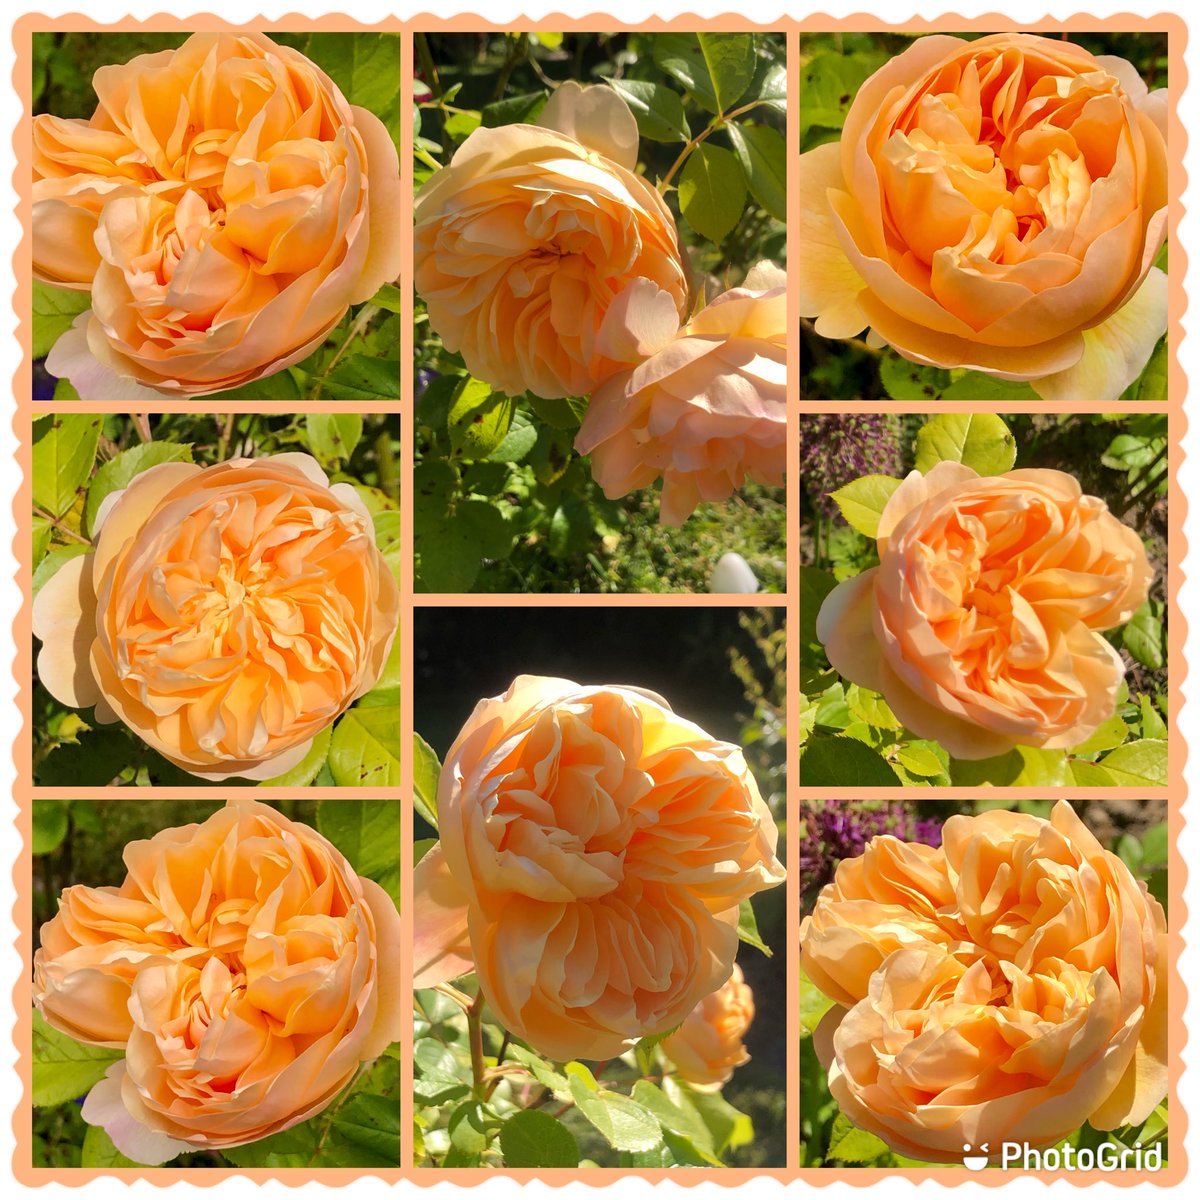 Roald Dahl gorgeous in the sun #RoseWednesday #Roses #Sunny #Flowers #Gardening #beautiful #davidaustinroses #MyGarden